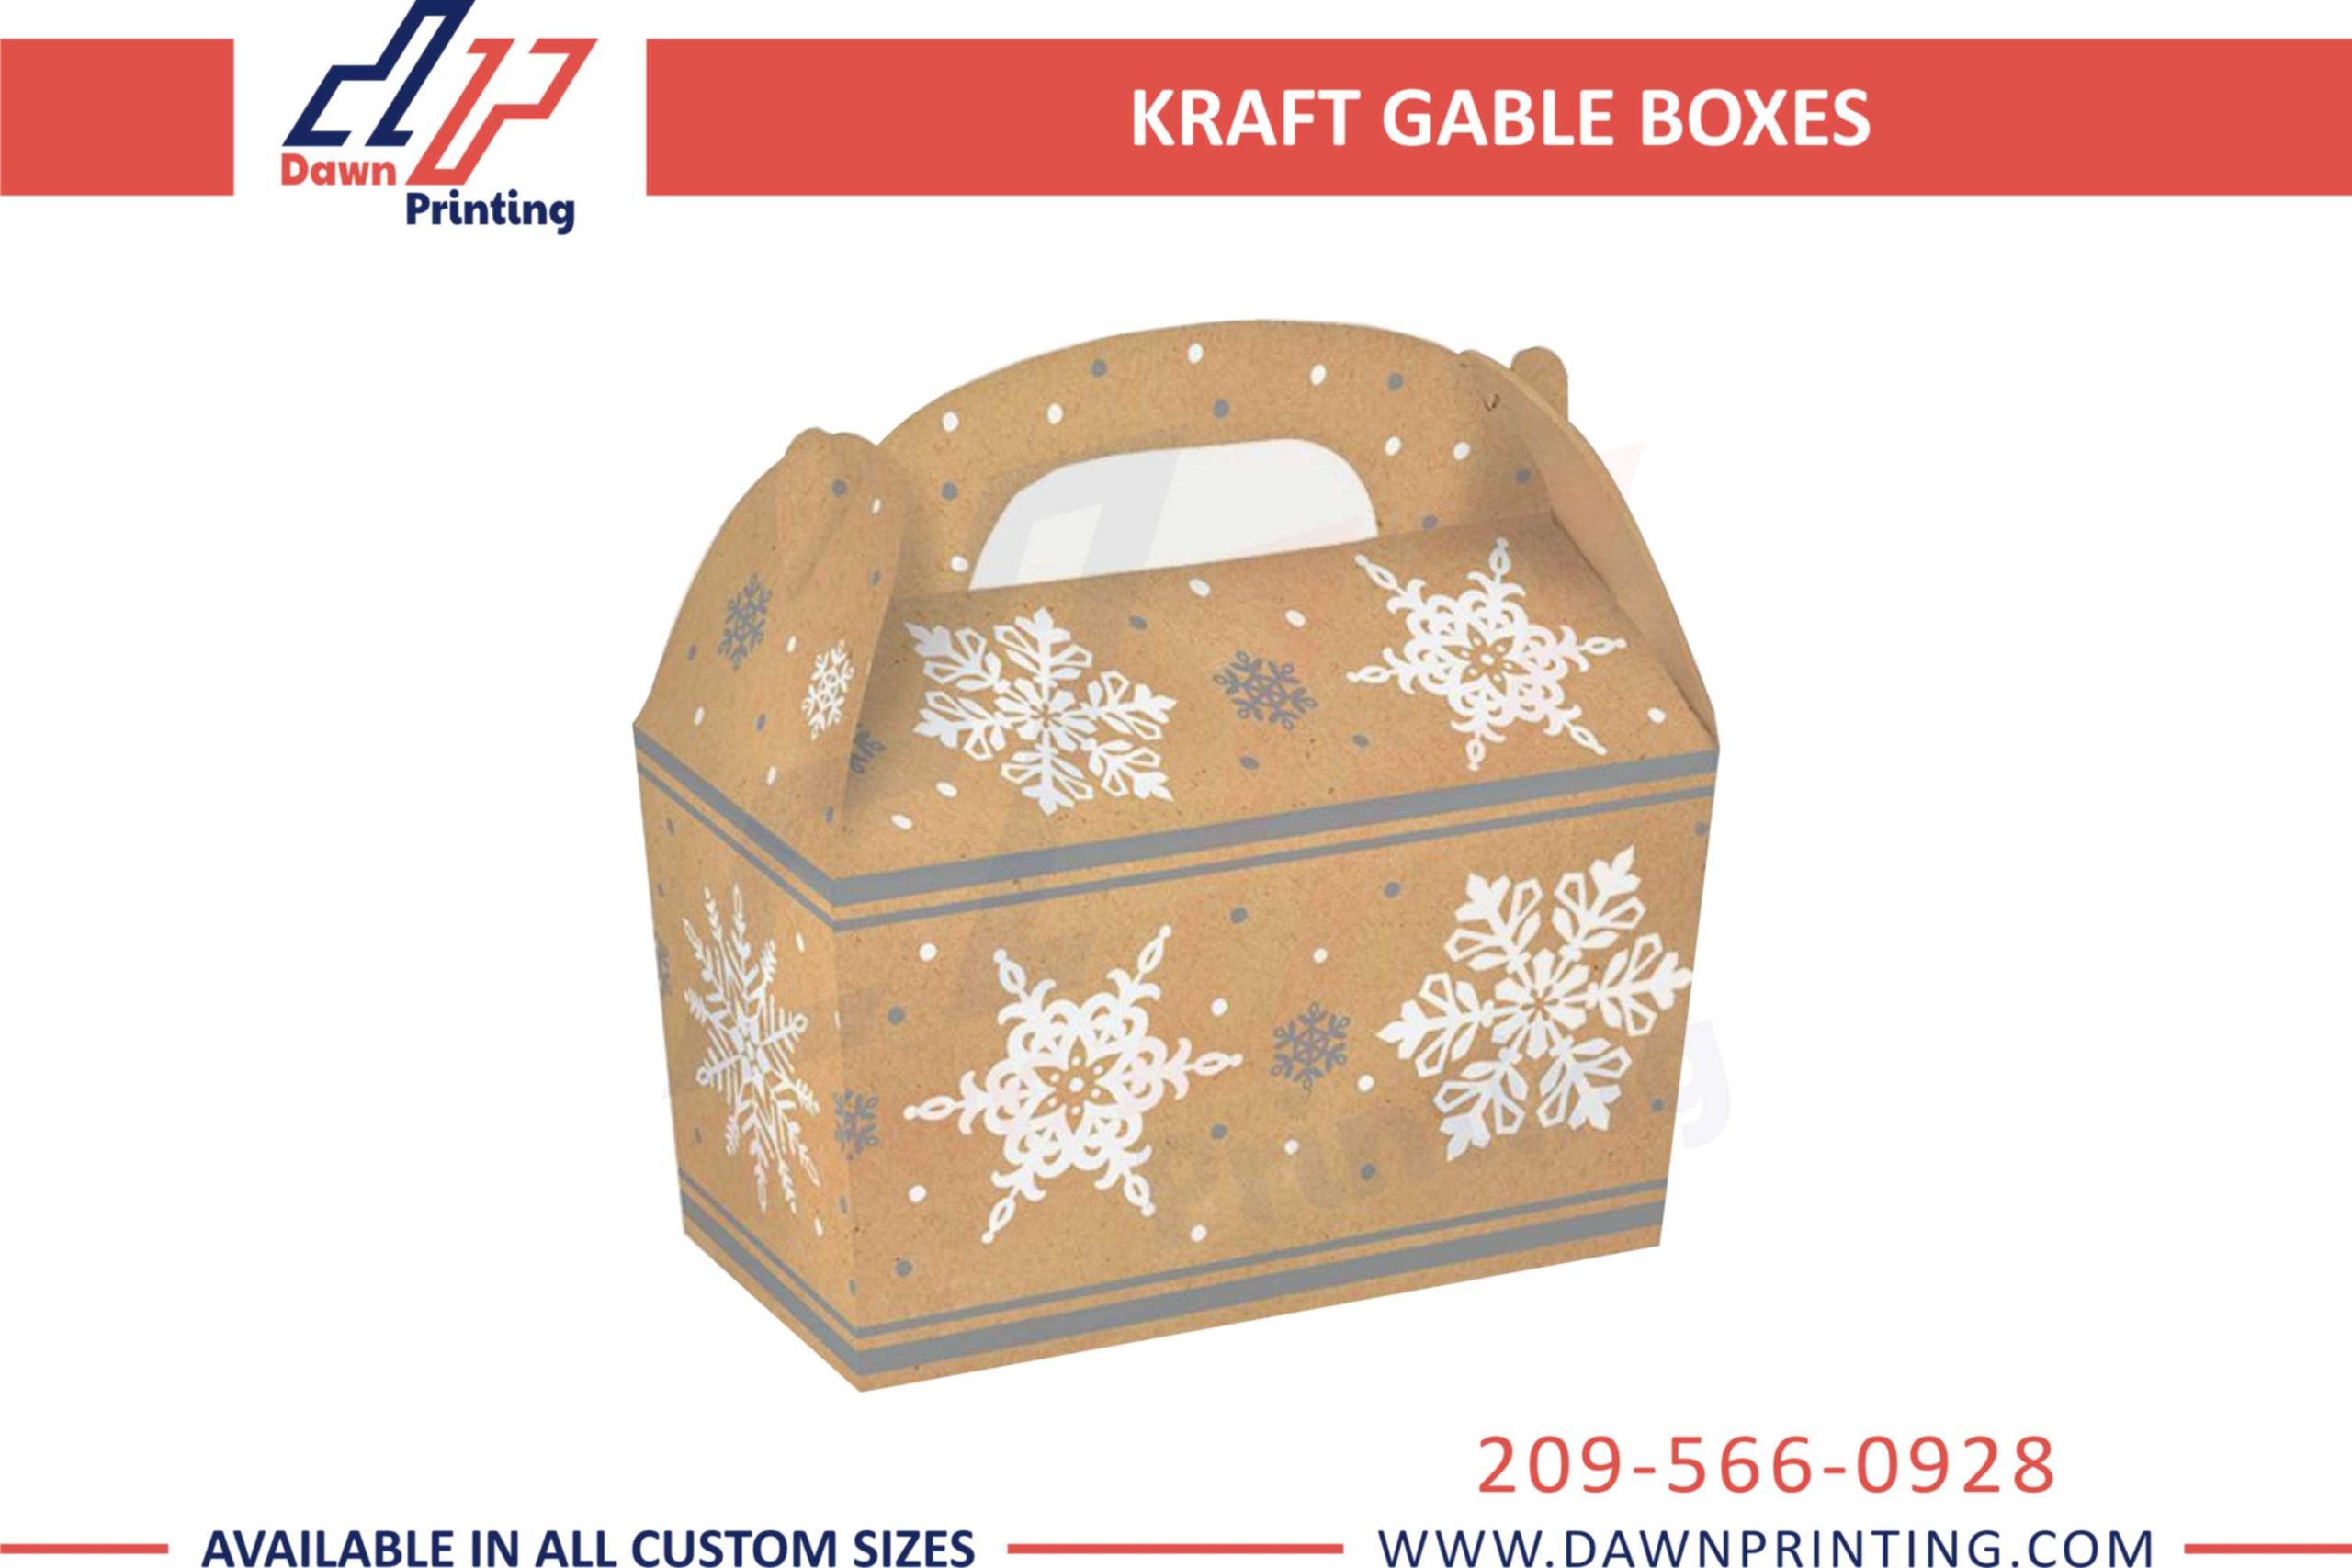 Printed Kraft Gable Boxes - Dawn Printing